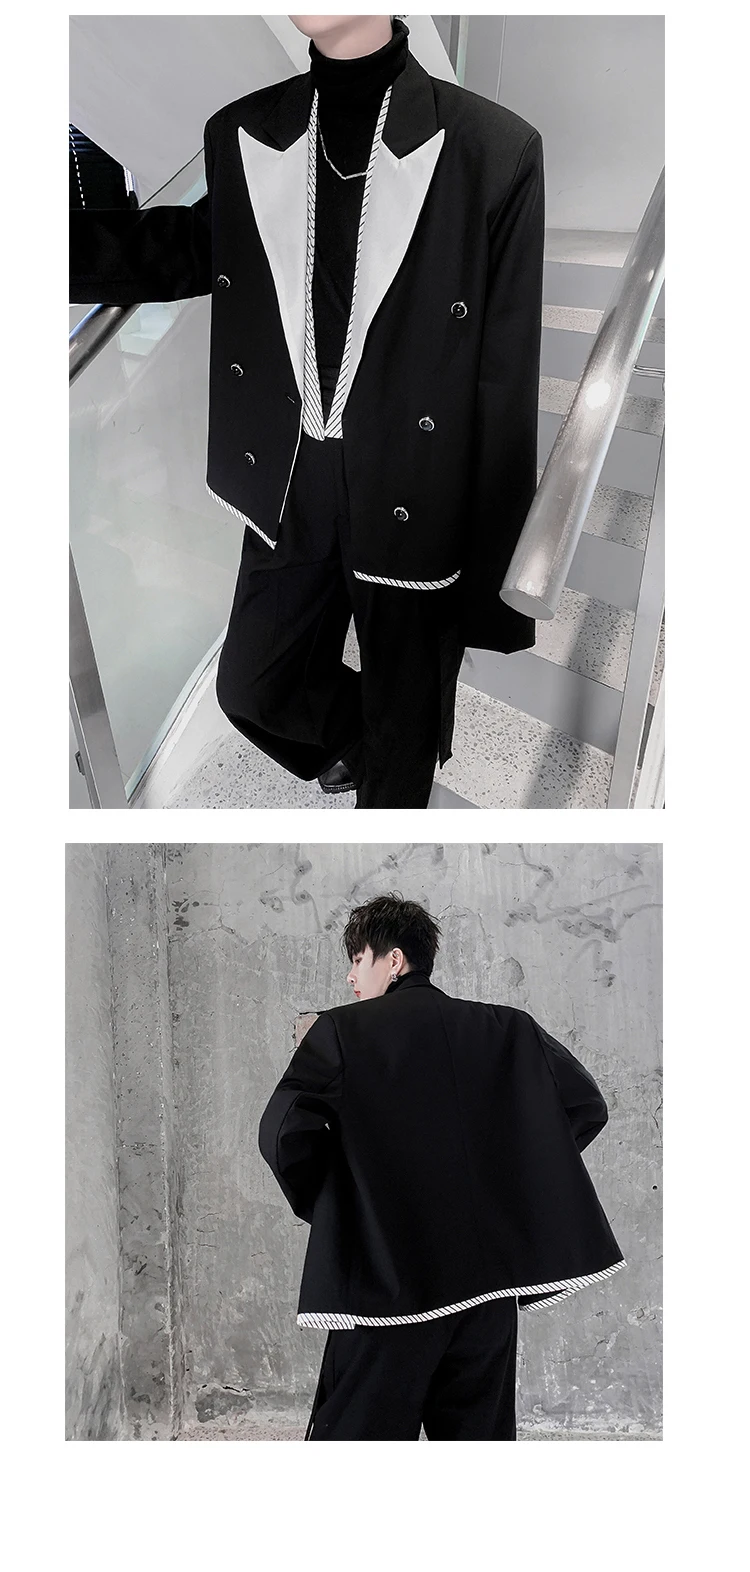 net celebridade splice design casual blazers homem coreano streetwear moda vintage duplo breasted terno casaco blazer masculino